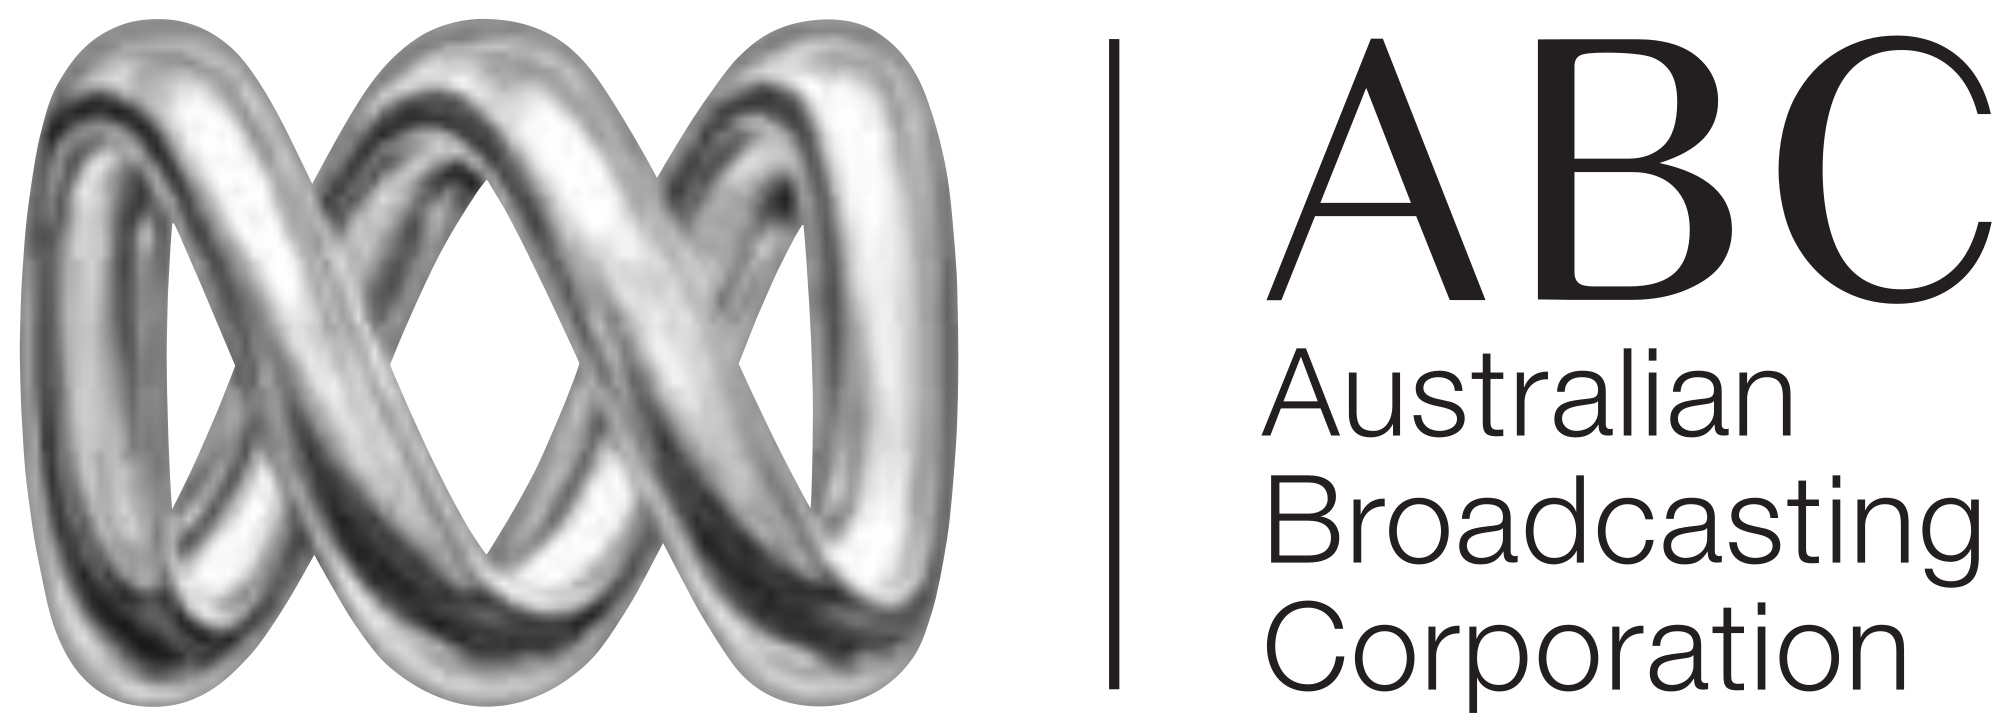 2000px-Australian_Broadcasting_Corporation.svg.png